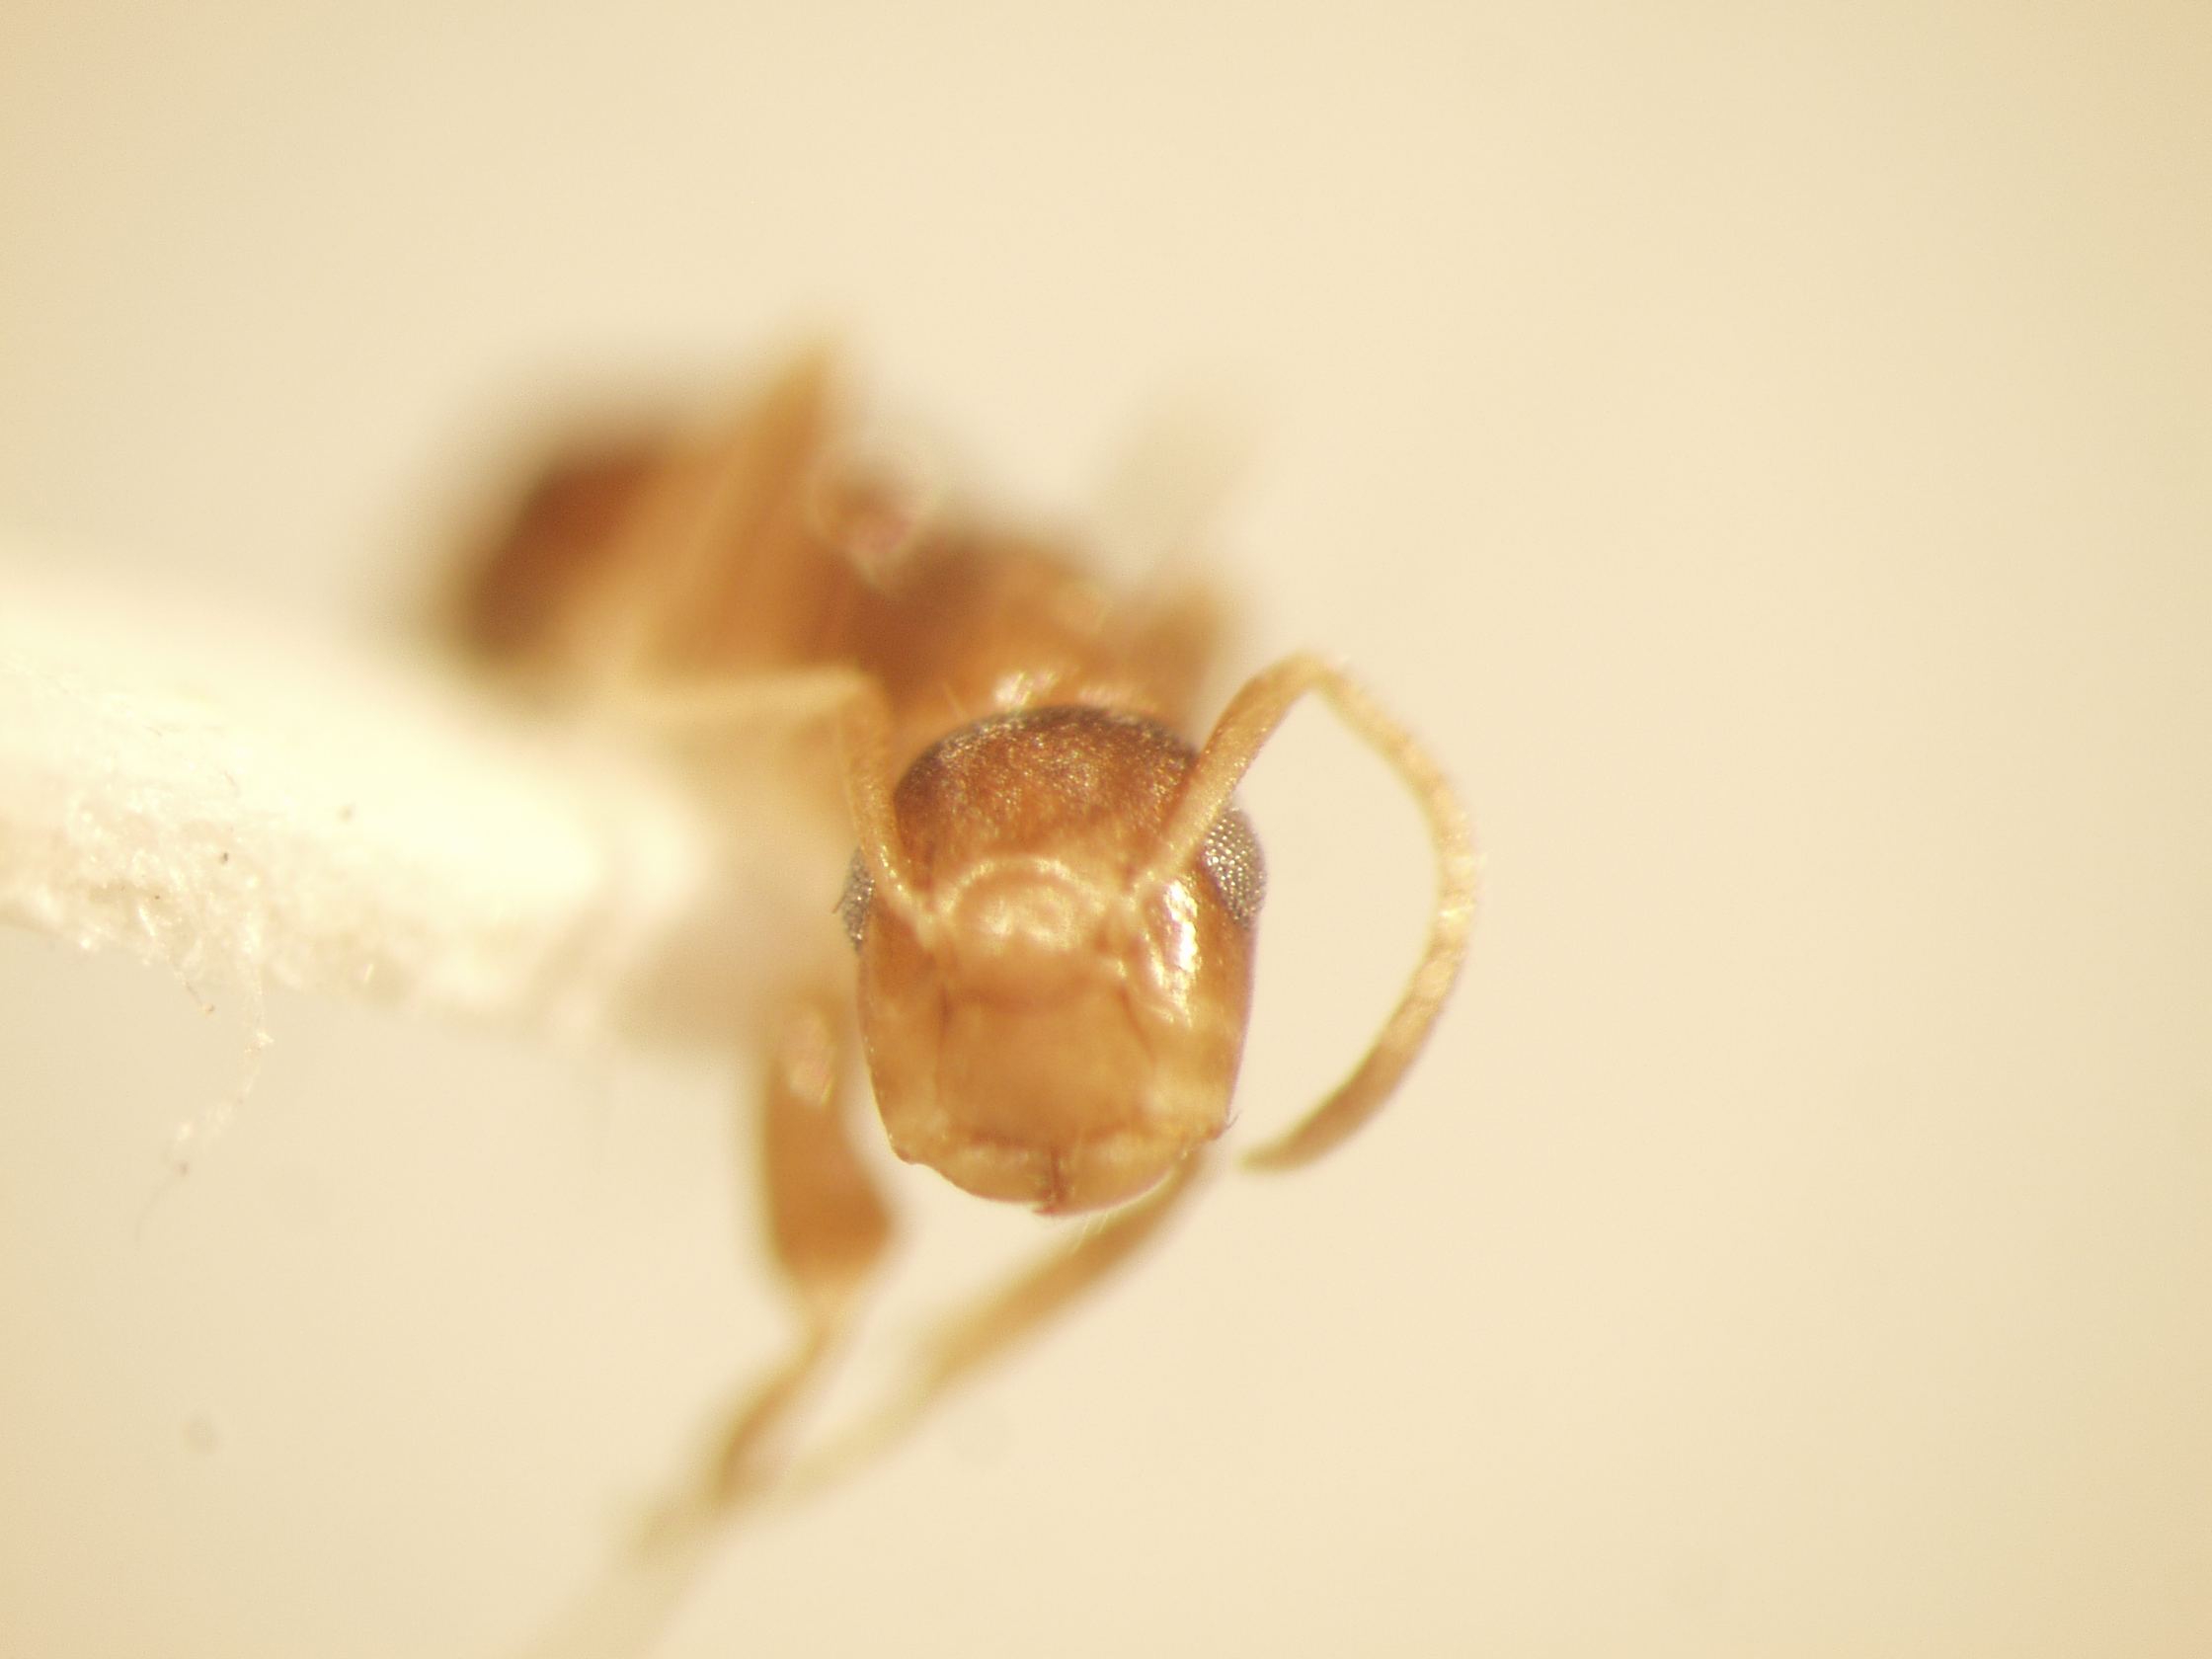 Camponotus 68 frontal